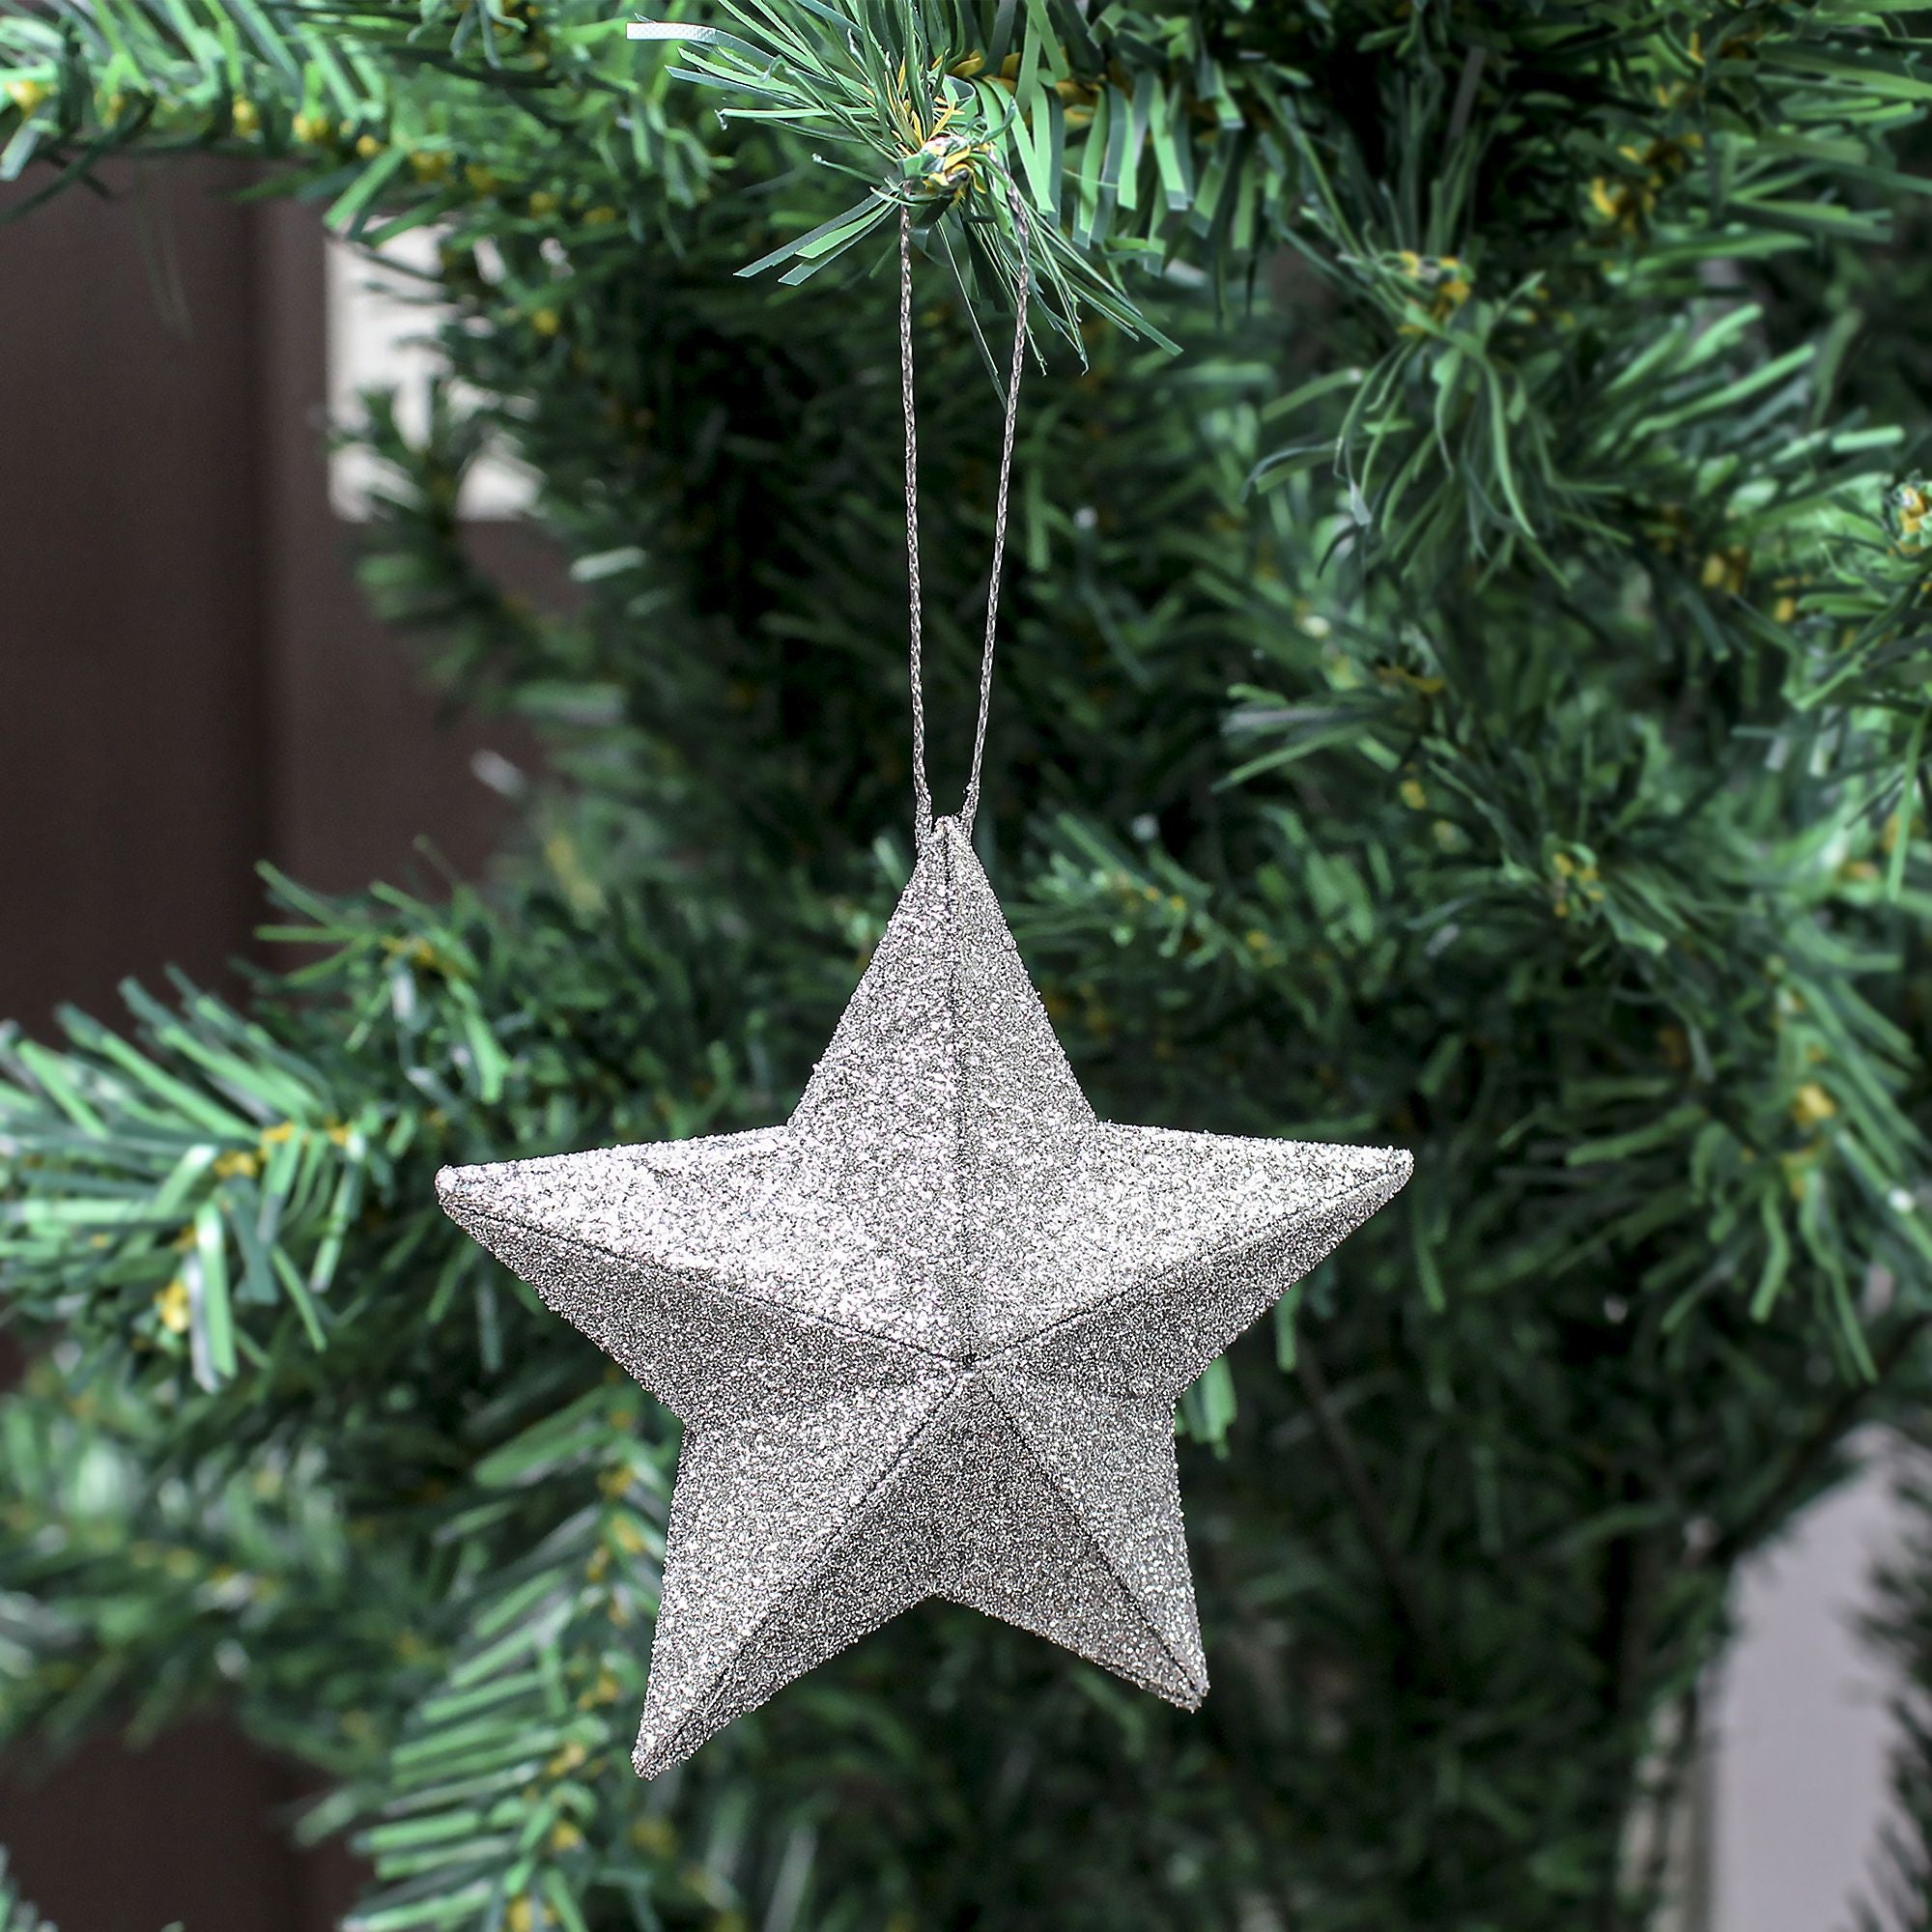 Handmade Christmas Ornaments - 3D Glitter Star, 3.25inch, Silver, 4pc